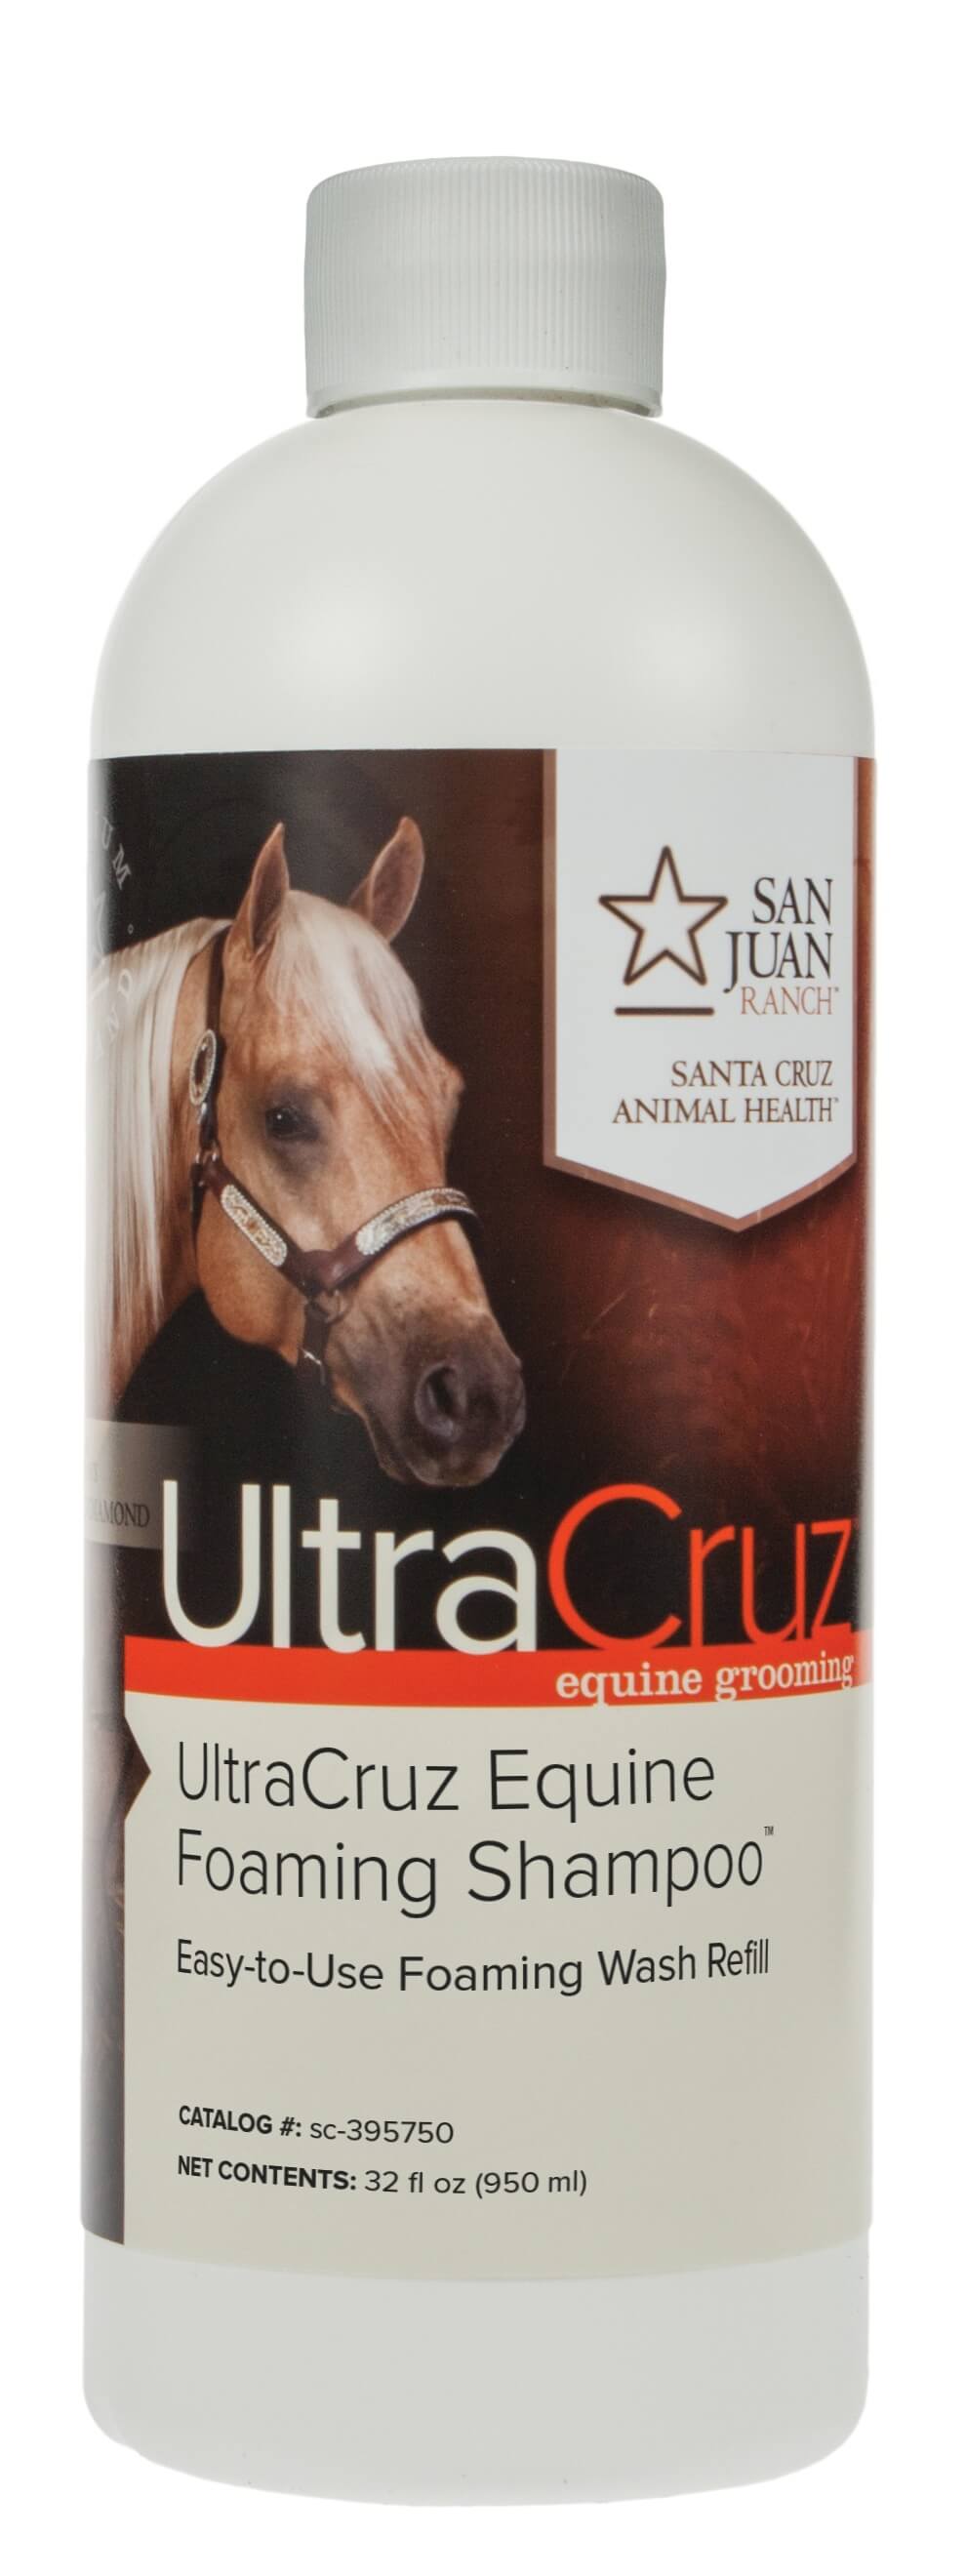 Equine Foaming Shampoo Plus for Horses – UltraCruz